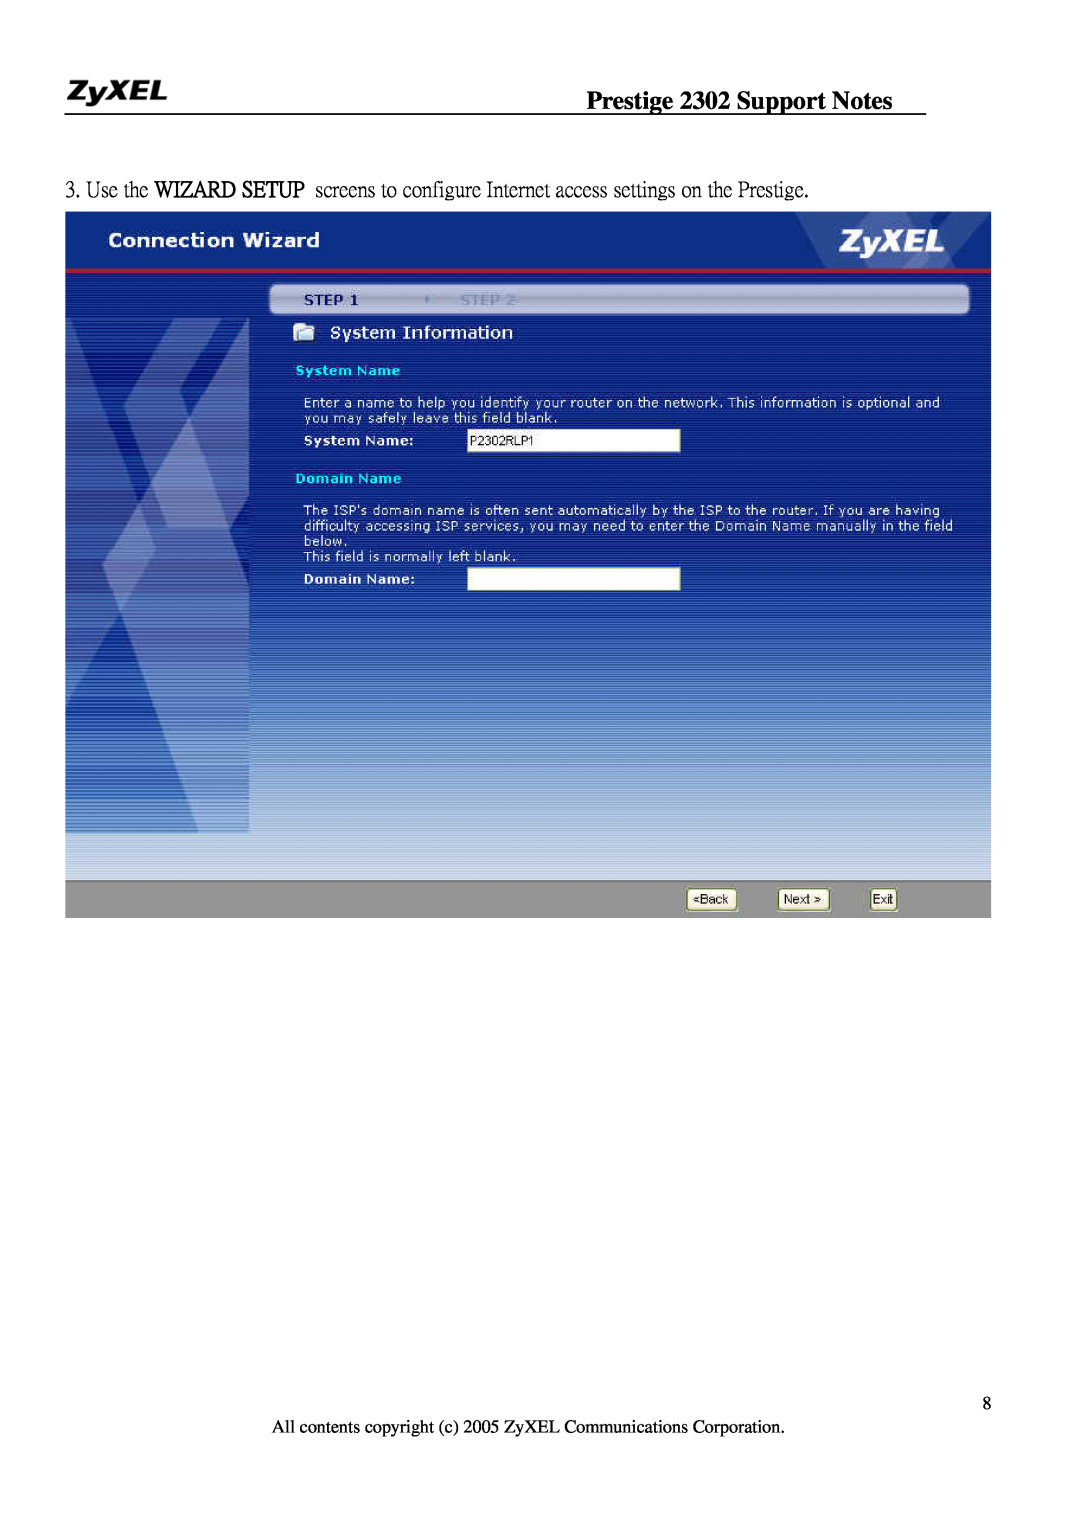 ZyXEL Communications P-2302HW Prestige 2302 Support Notes, All contents copyright c 2005 ZyXEL Communications Corporation 